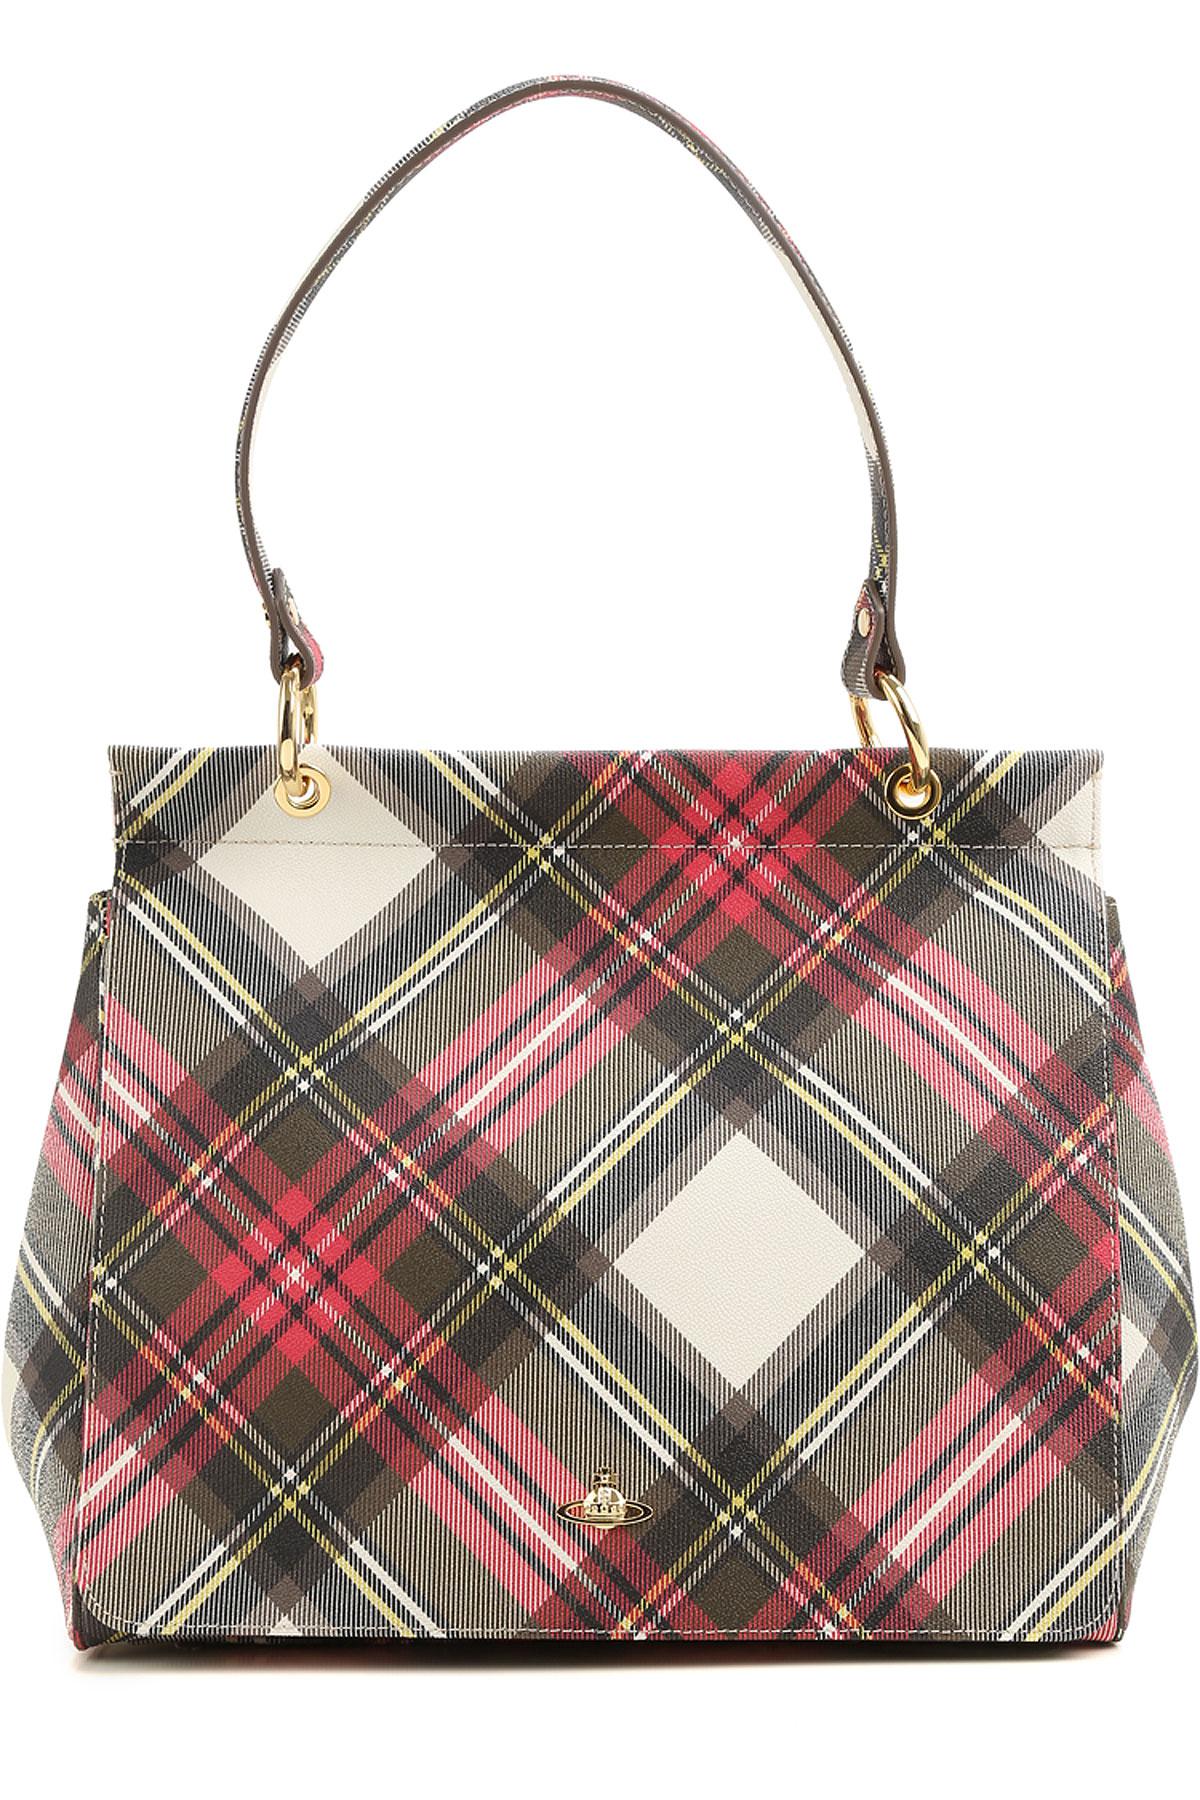 Vivienne Westwood Canvas Handbags - Save 5% - Lyst